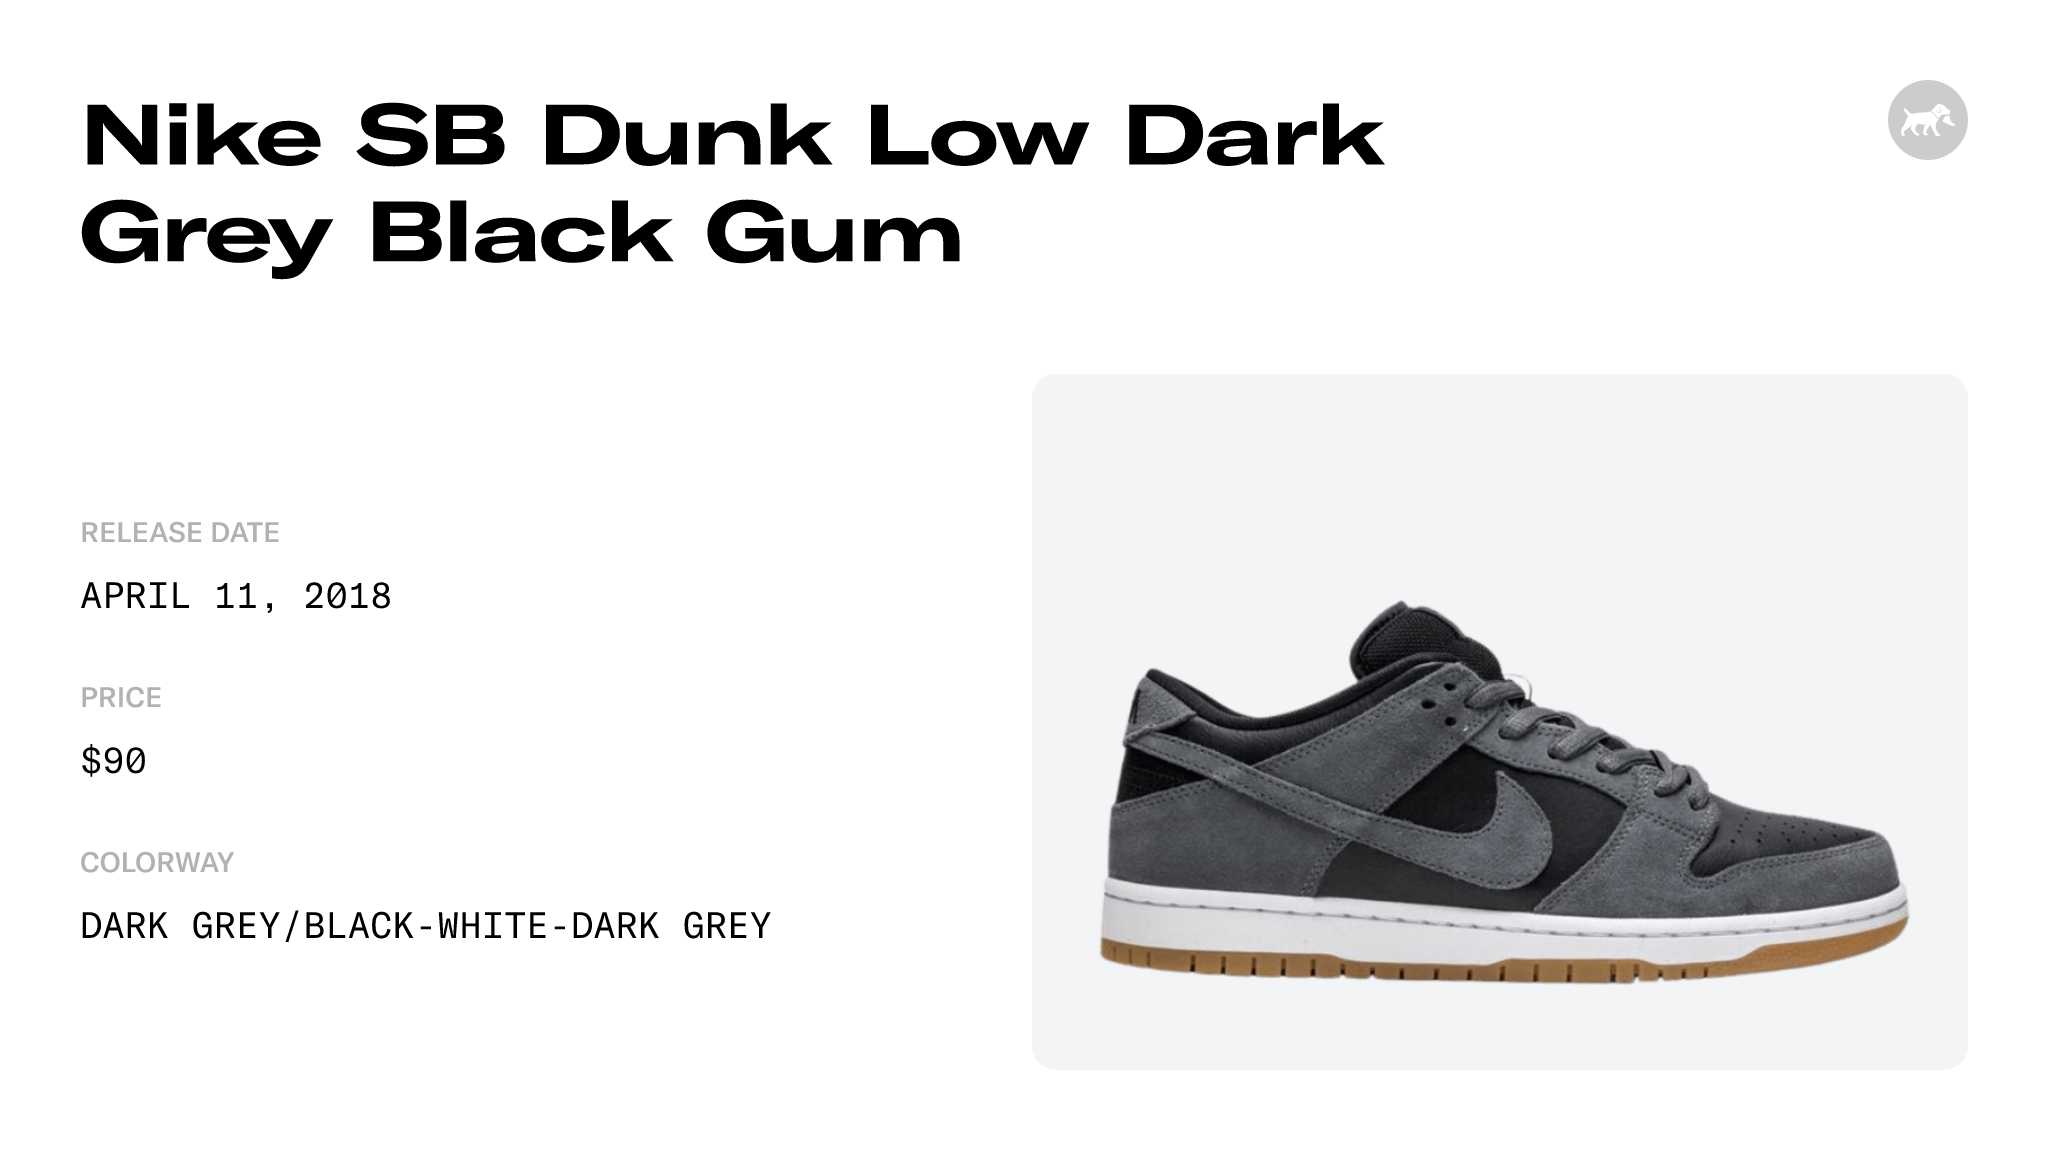 Nike SB Dunk Low Dark Grey Black Gum - AR0778-001 Raffles and Release Date